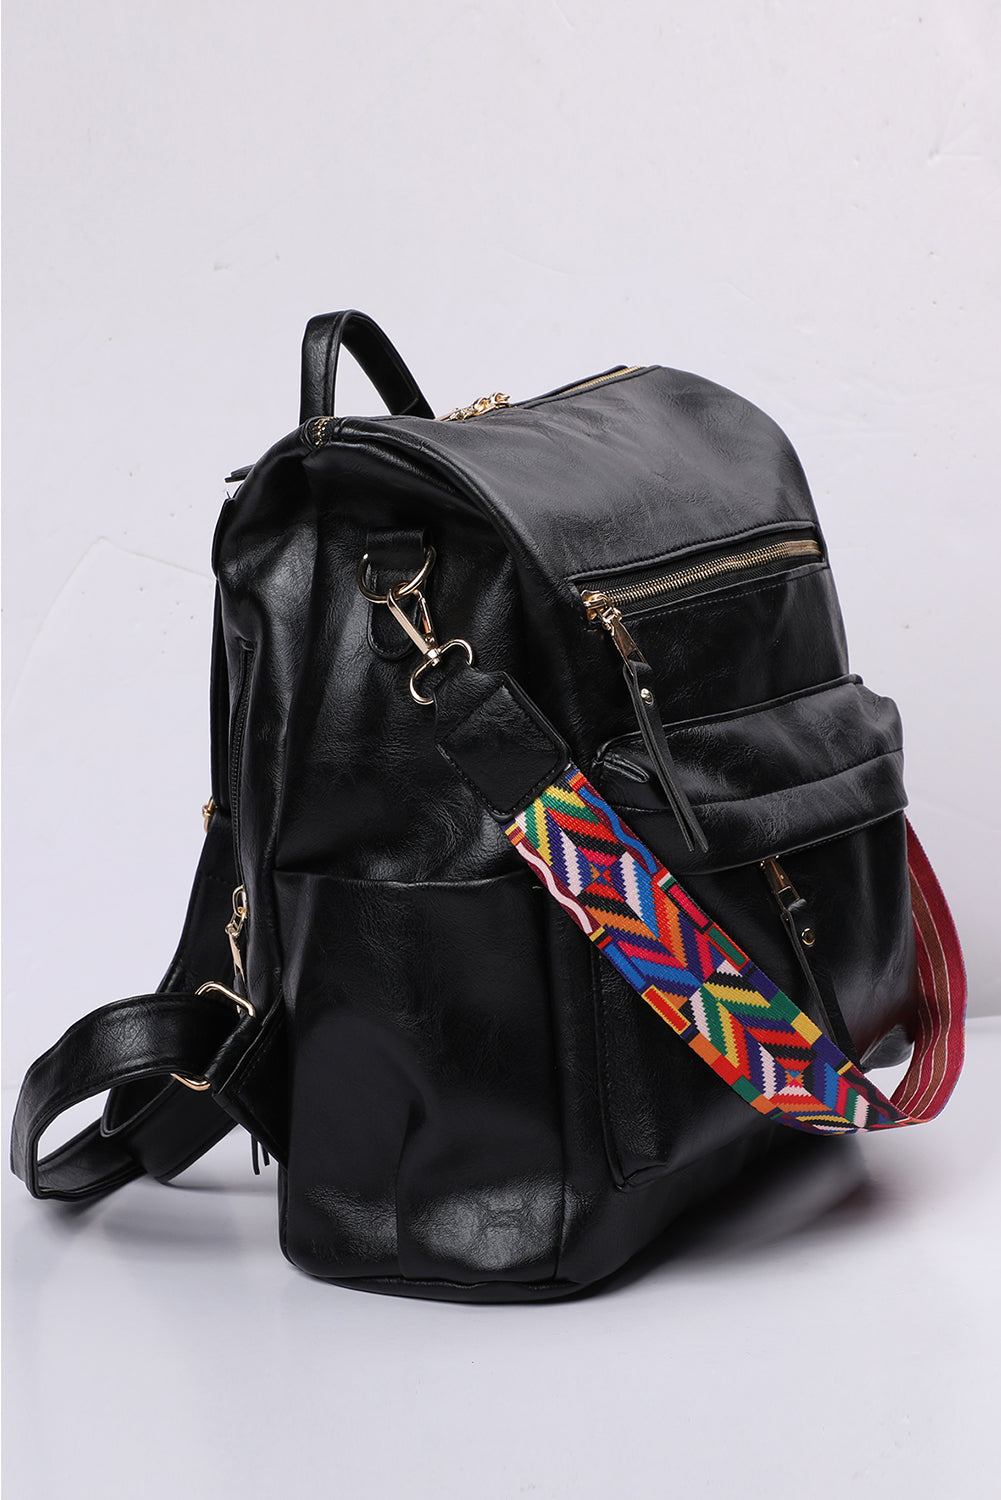 Black Geometric Crochet Strap PU Leather Large Backpack